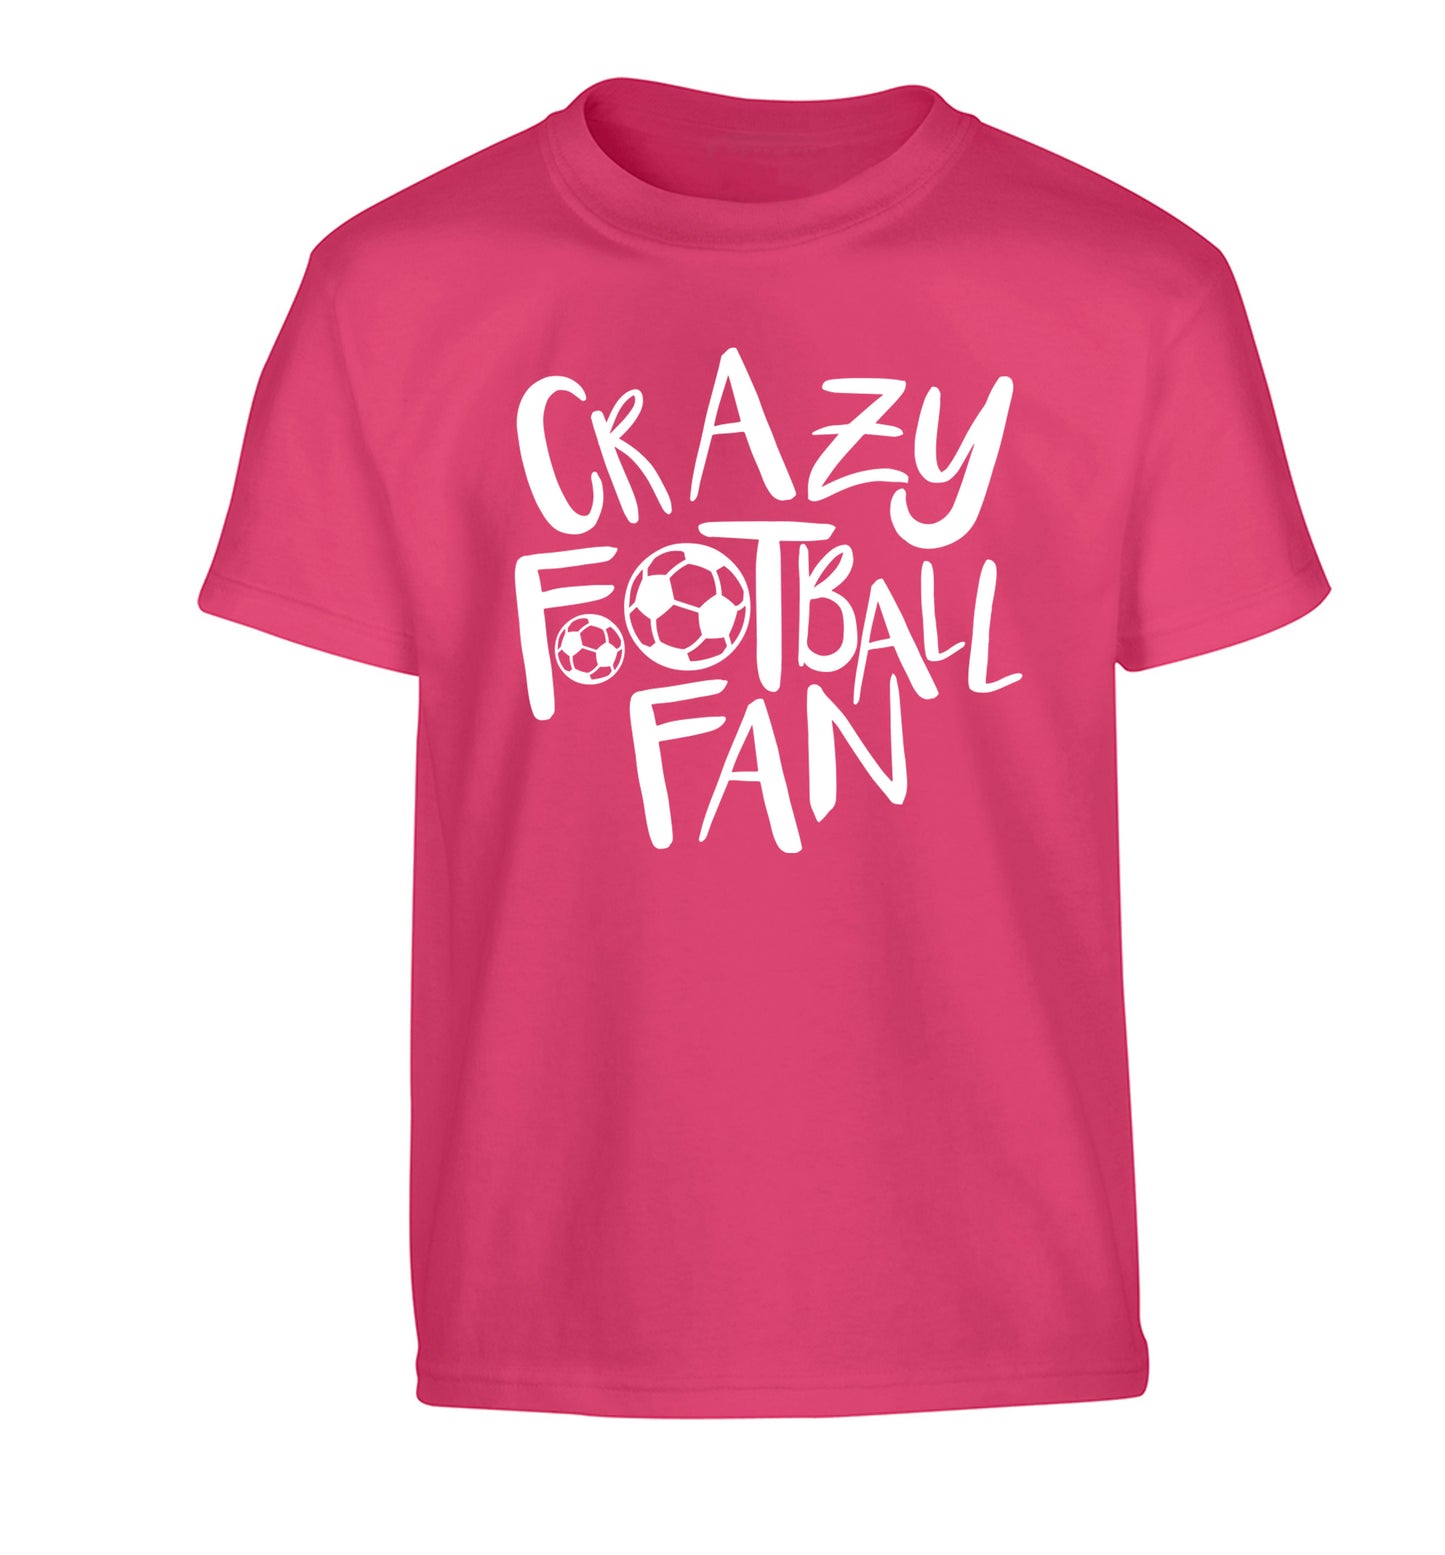 Crazy football fan Children's pink Tshirt 12-14 Years